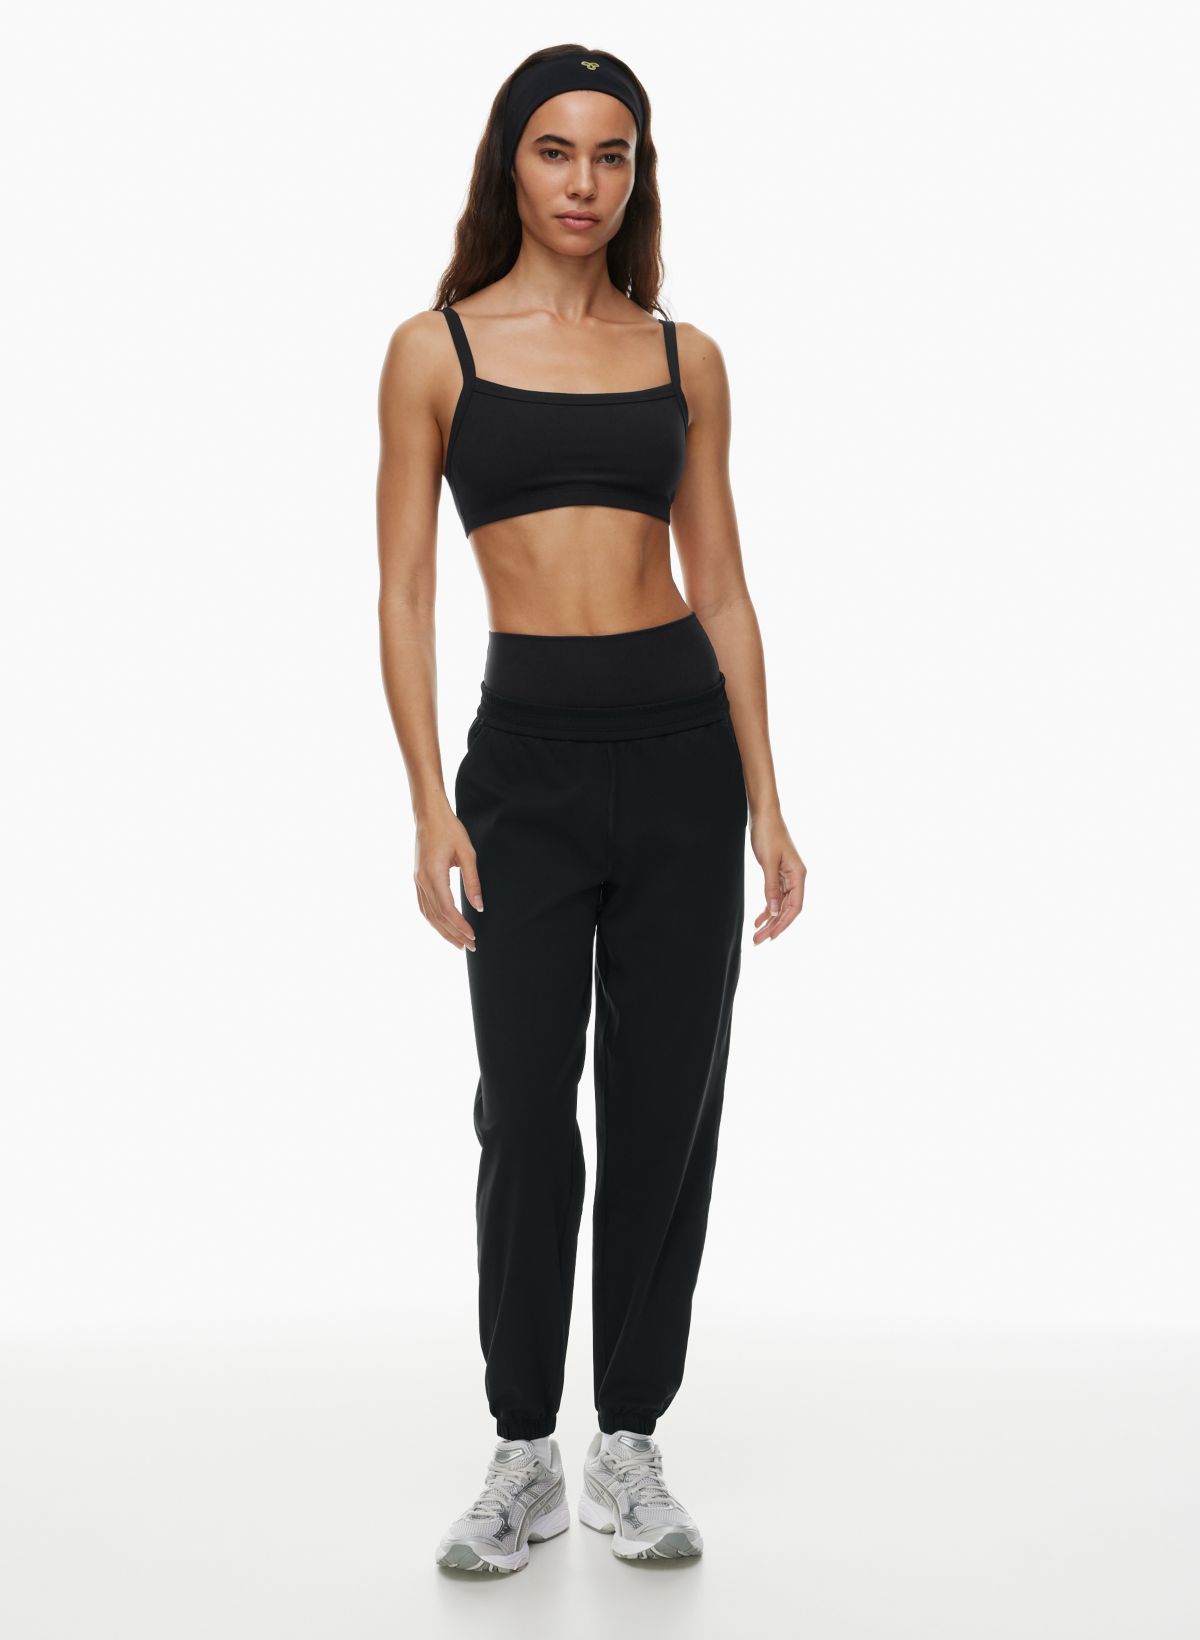 Dragon Fit  Women’s Jogger Workout Pants Olive Size L fits Medium